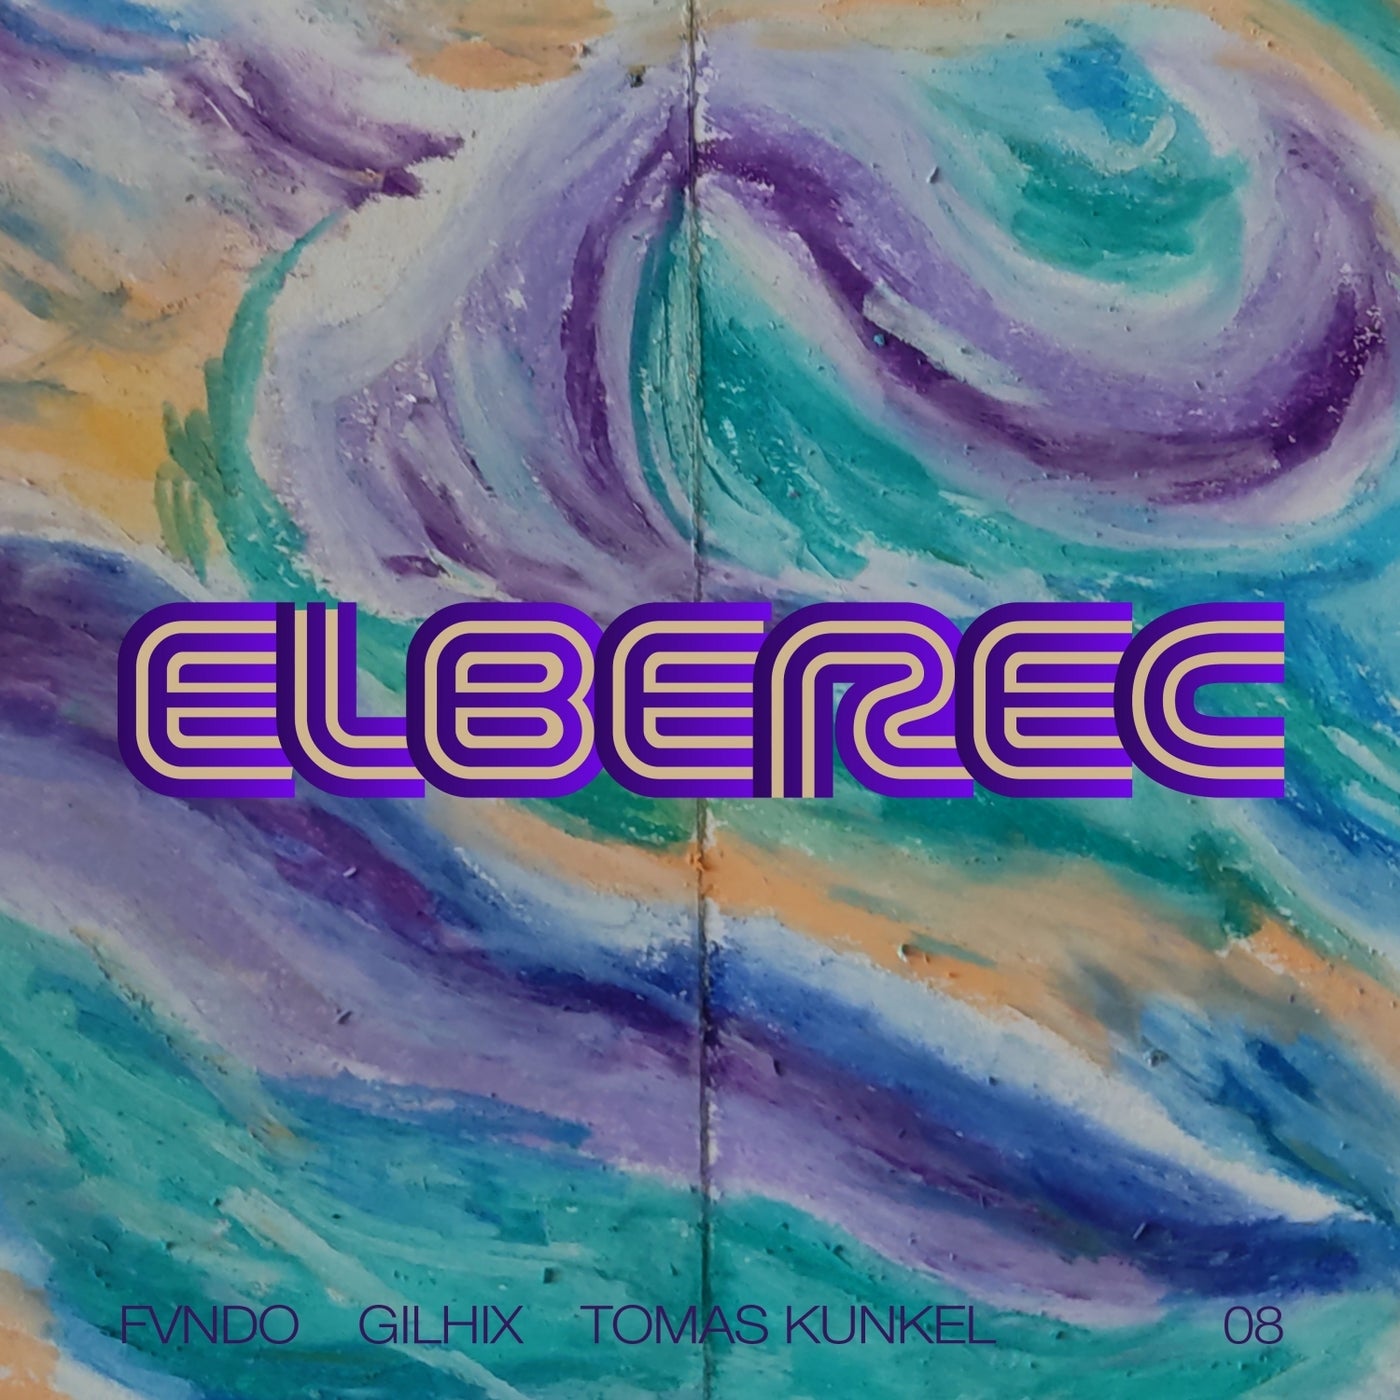 Download ELBEREC 08 on Electrobuzz